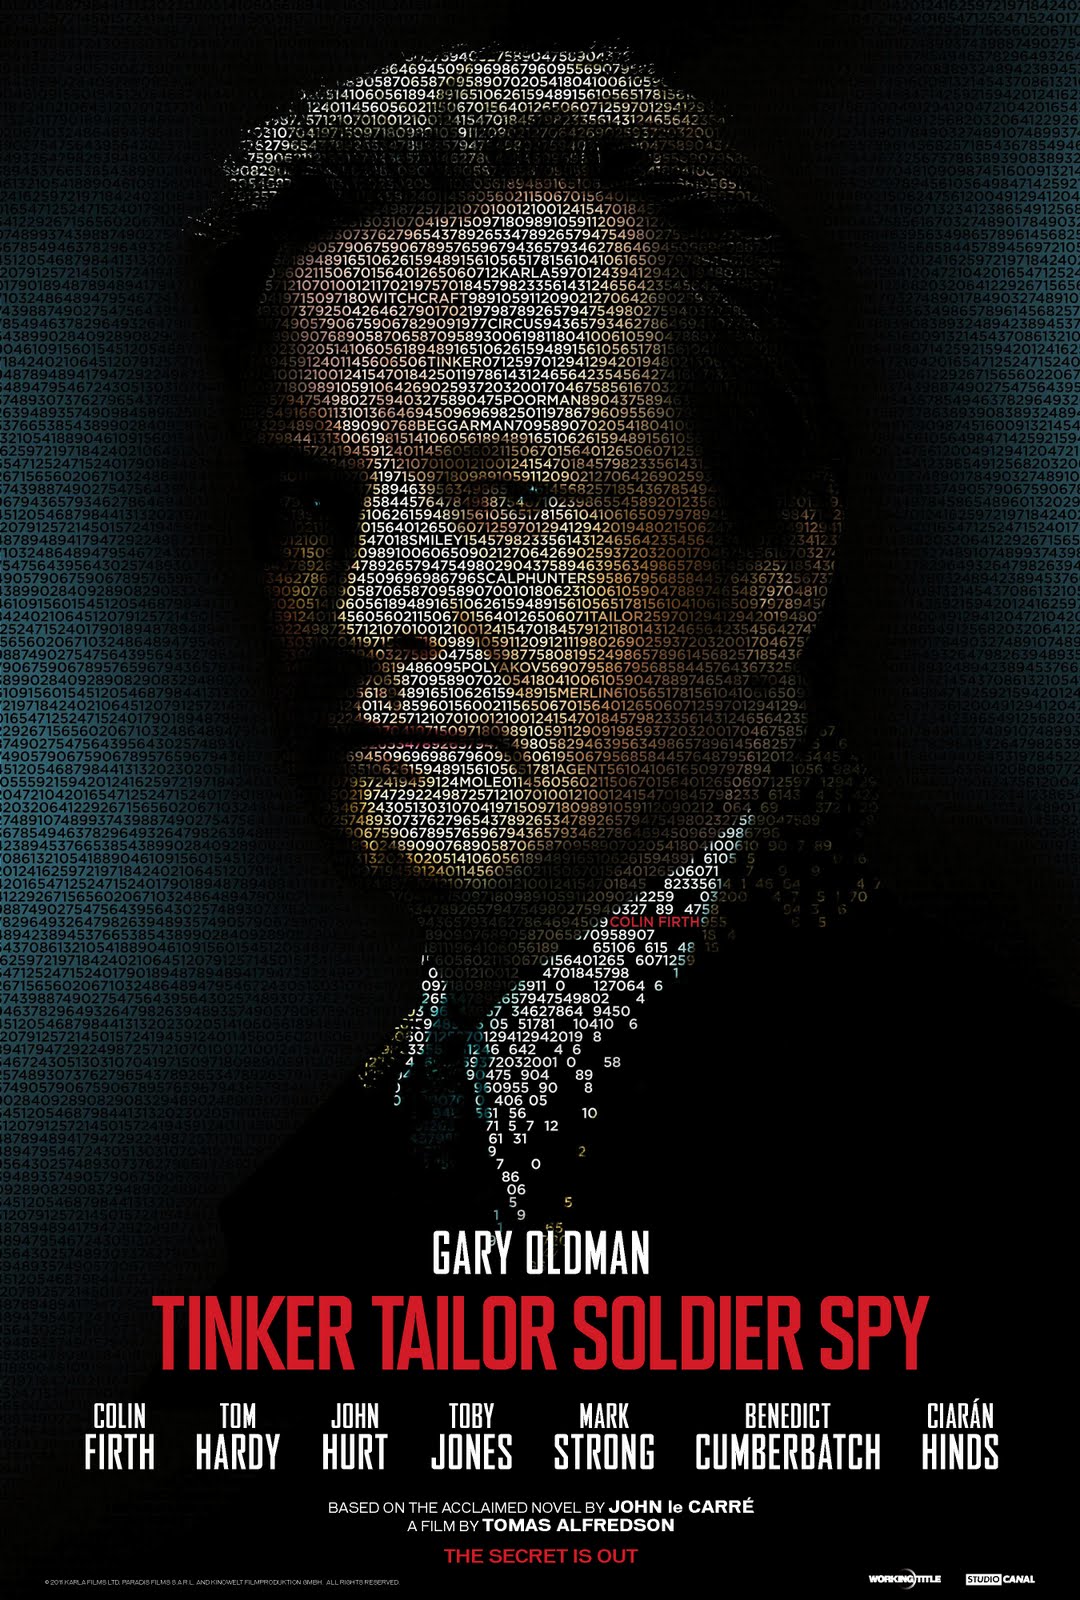 http://4.bp.blogspot.com/-2-8GYU9yxdg/Tk0wUKOEgRI/AAAAAAAAAwI/3zfl5_seLdI/s1600/tinker-tailor-soldier-spy-movie-poster-colin-firth.jpg